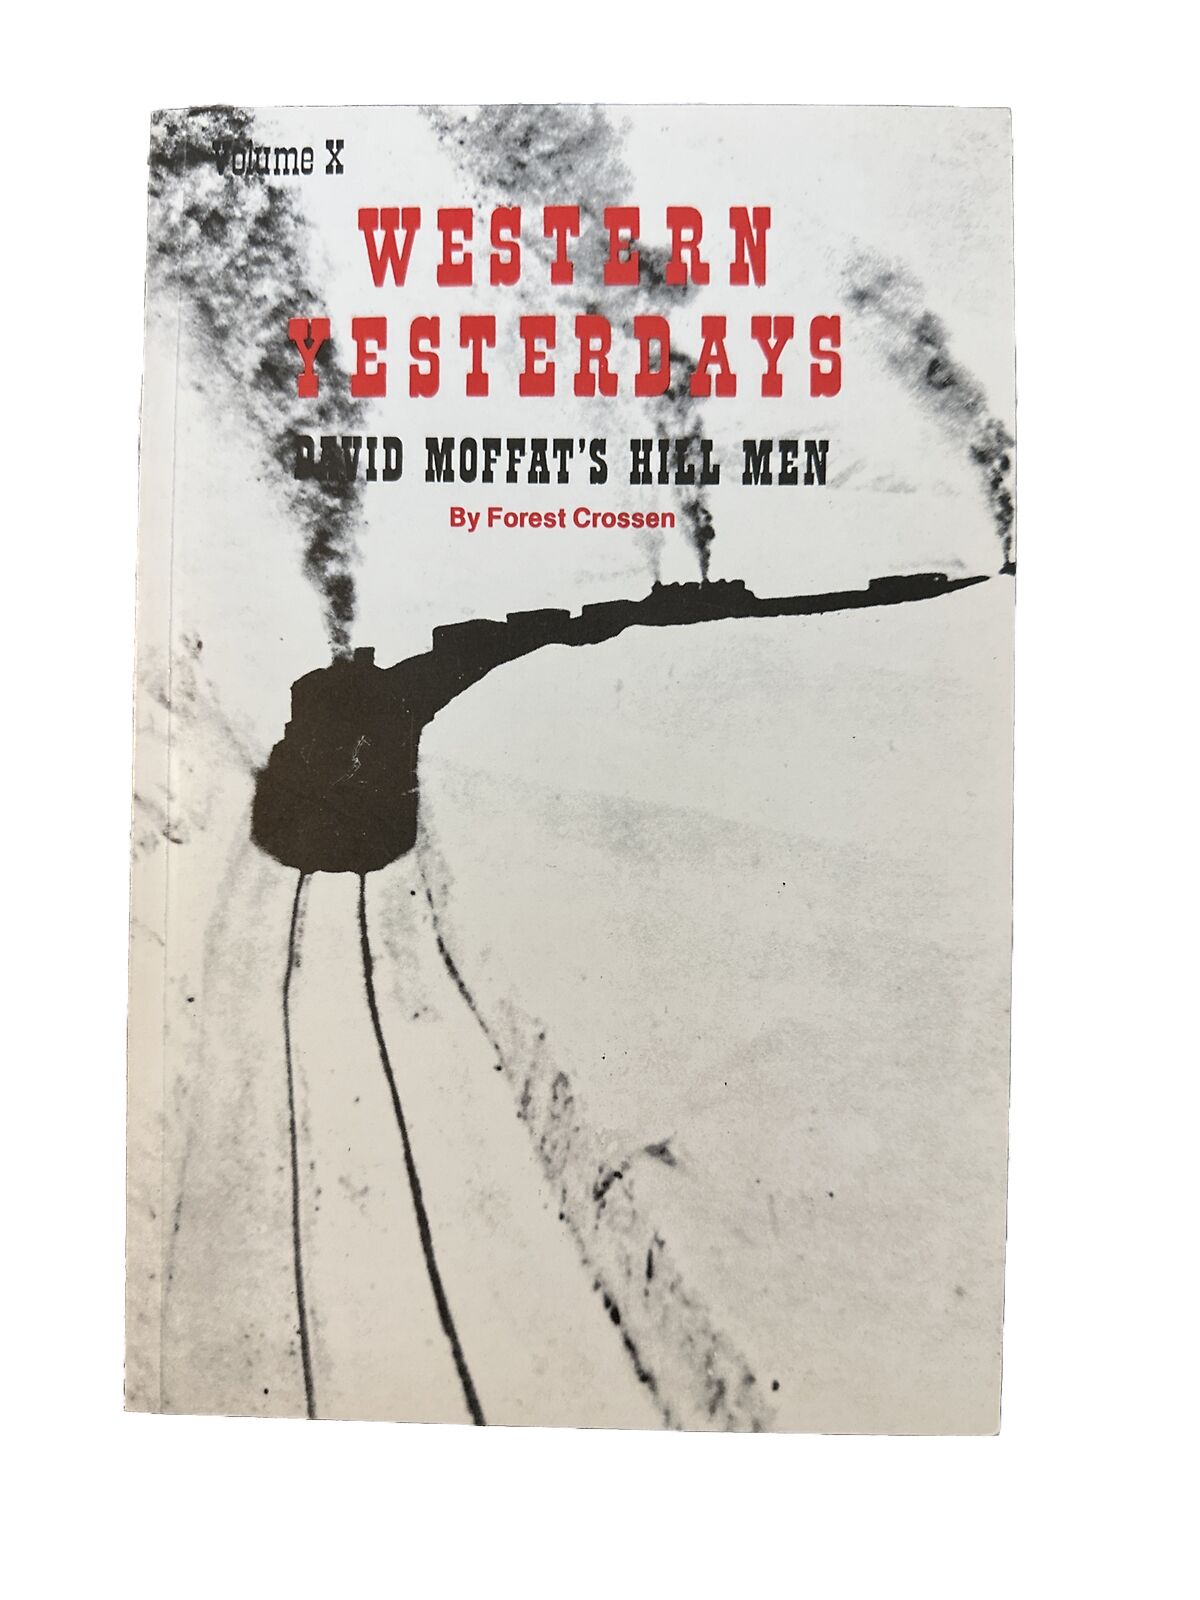 Western Yesterdays Volume X, David Moffat's Hill Men